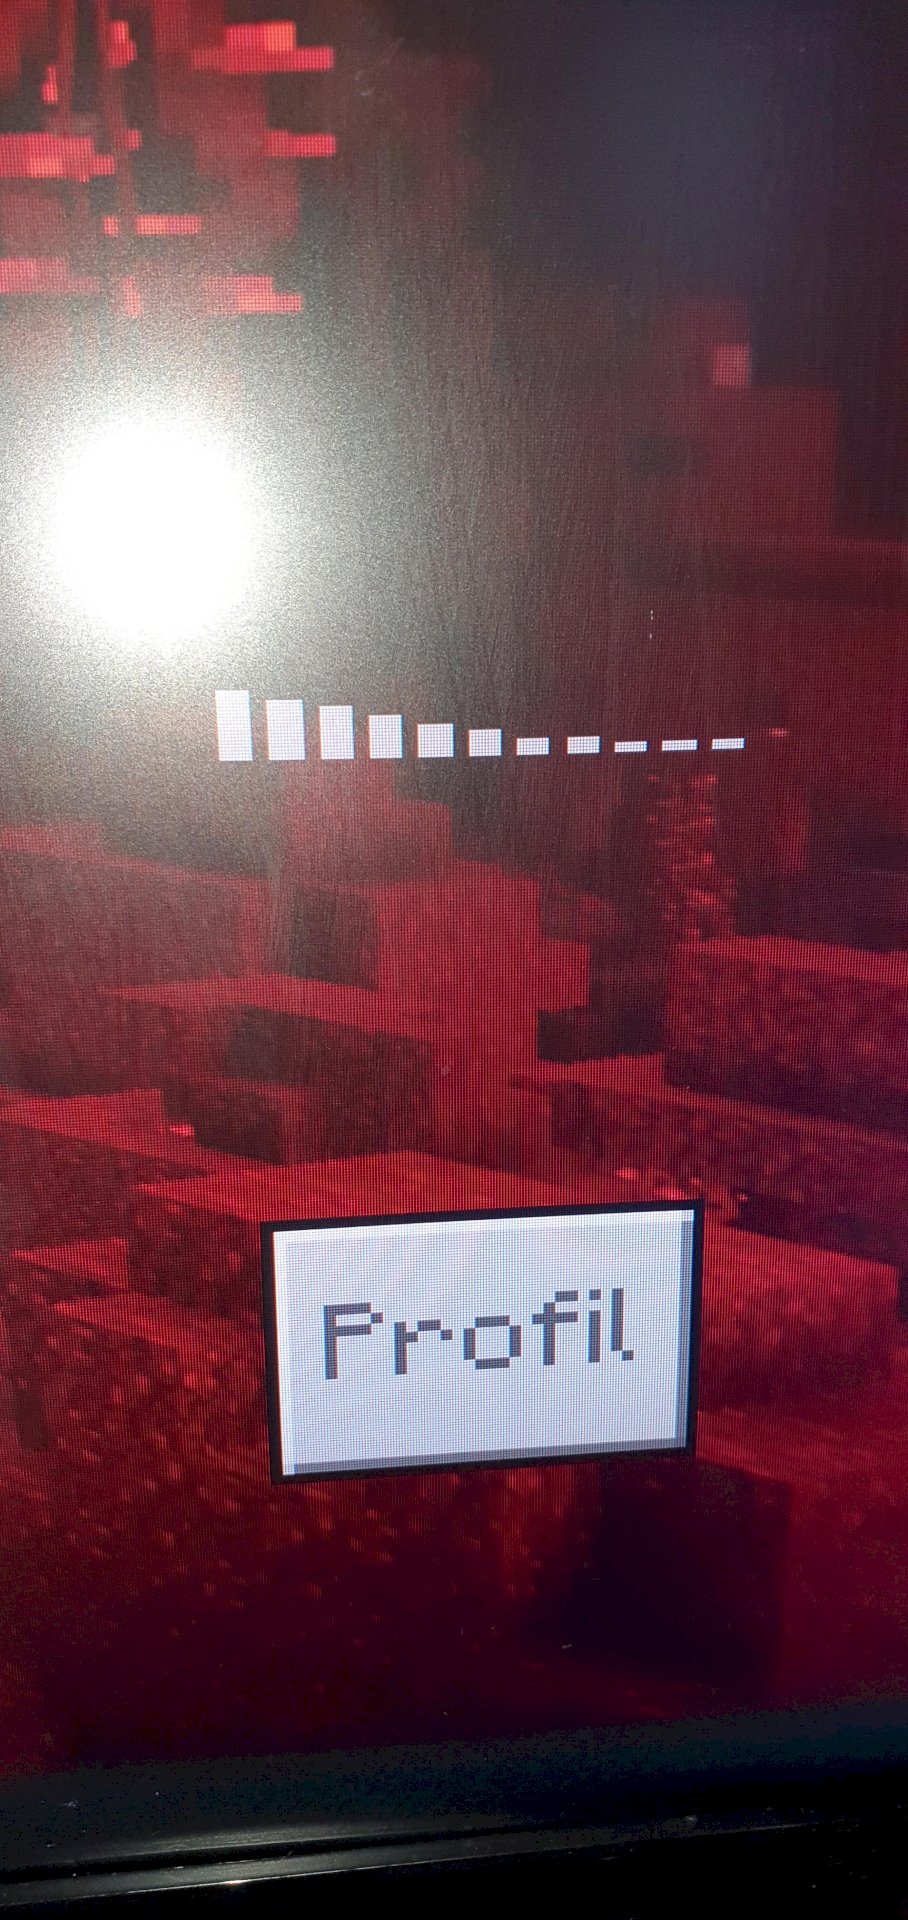 My Minecraft Skins have stopped loading Bedrock